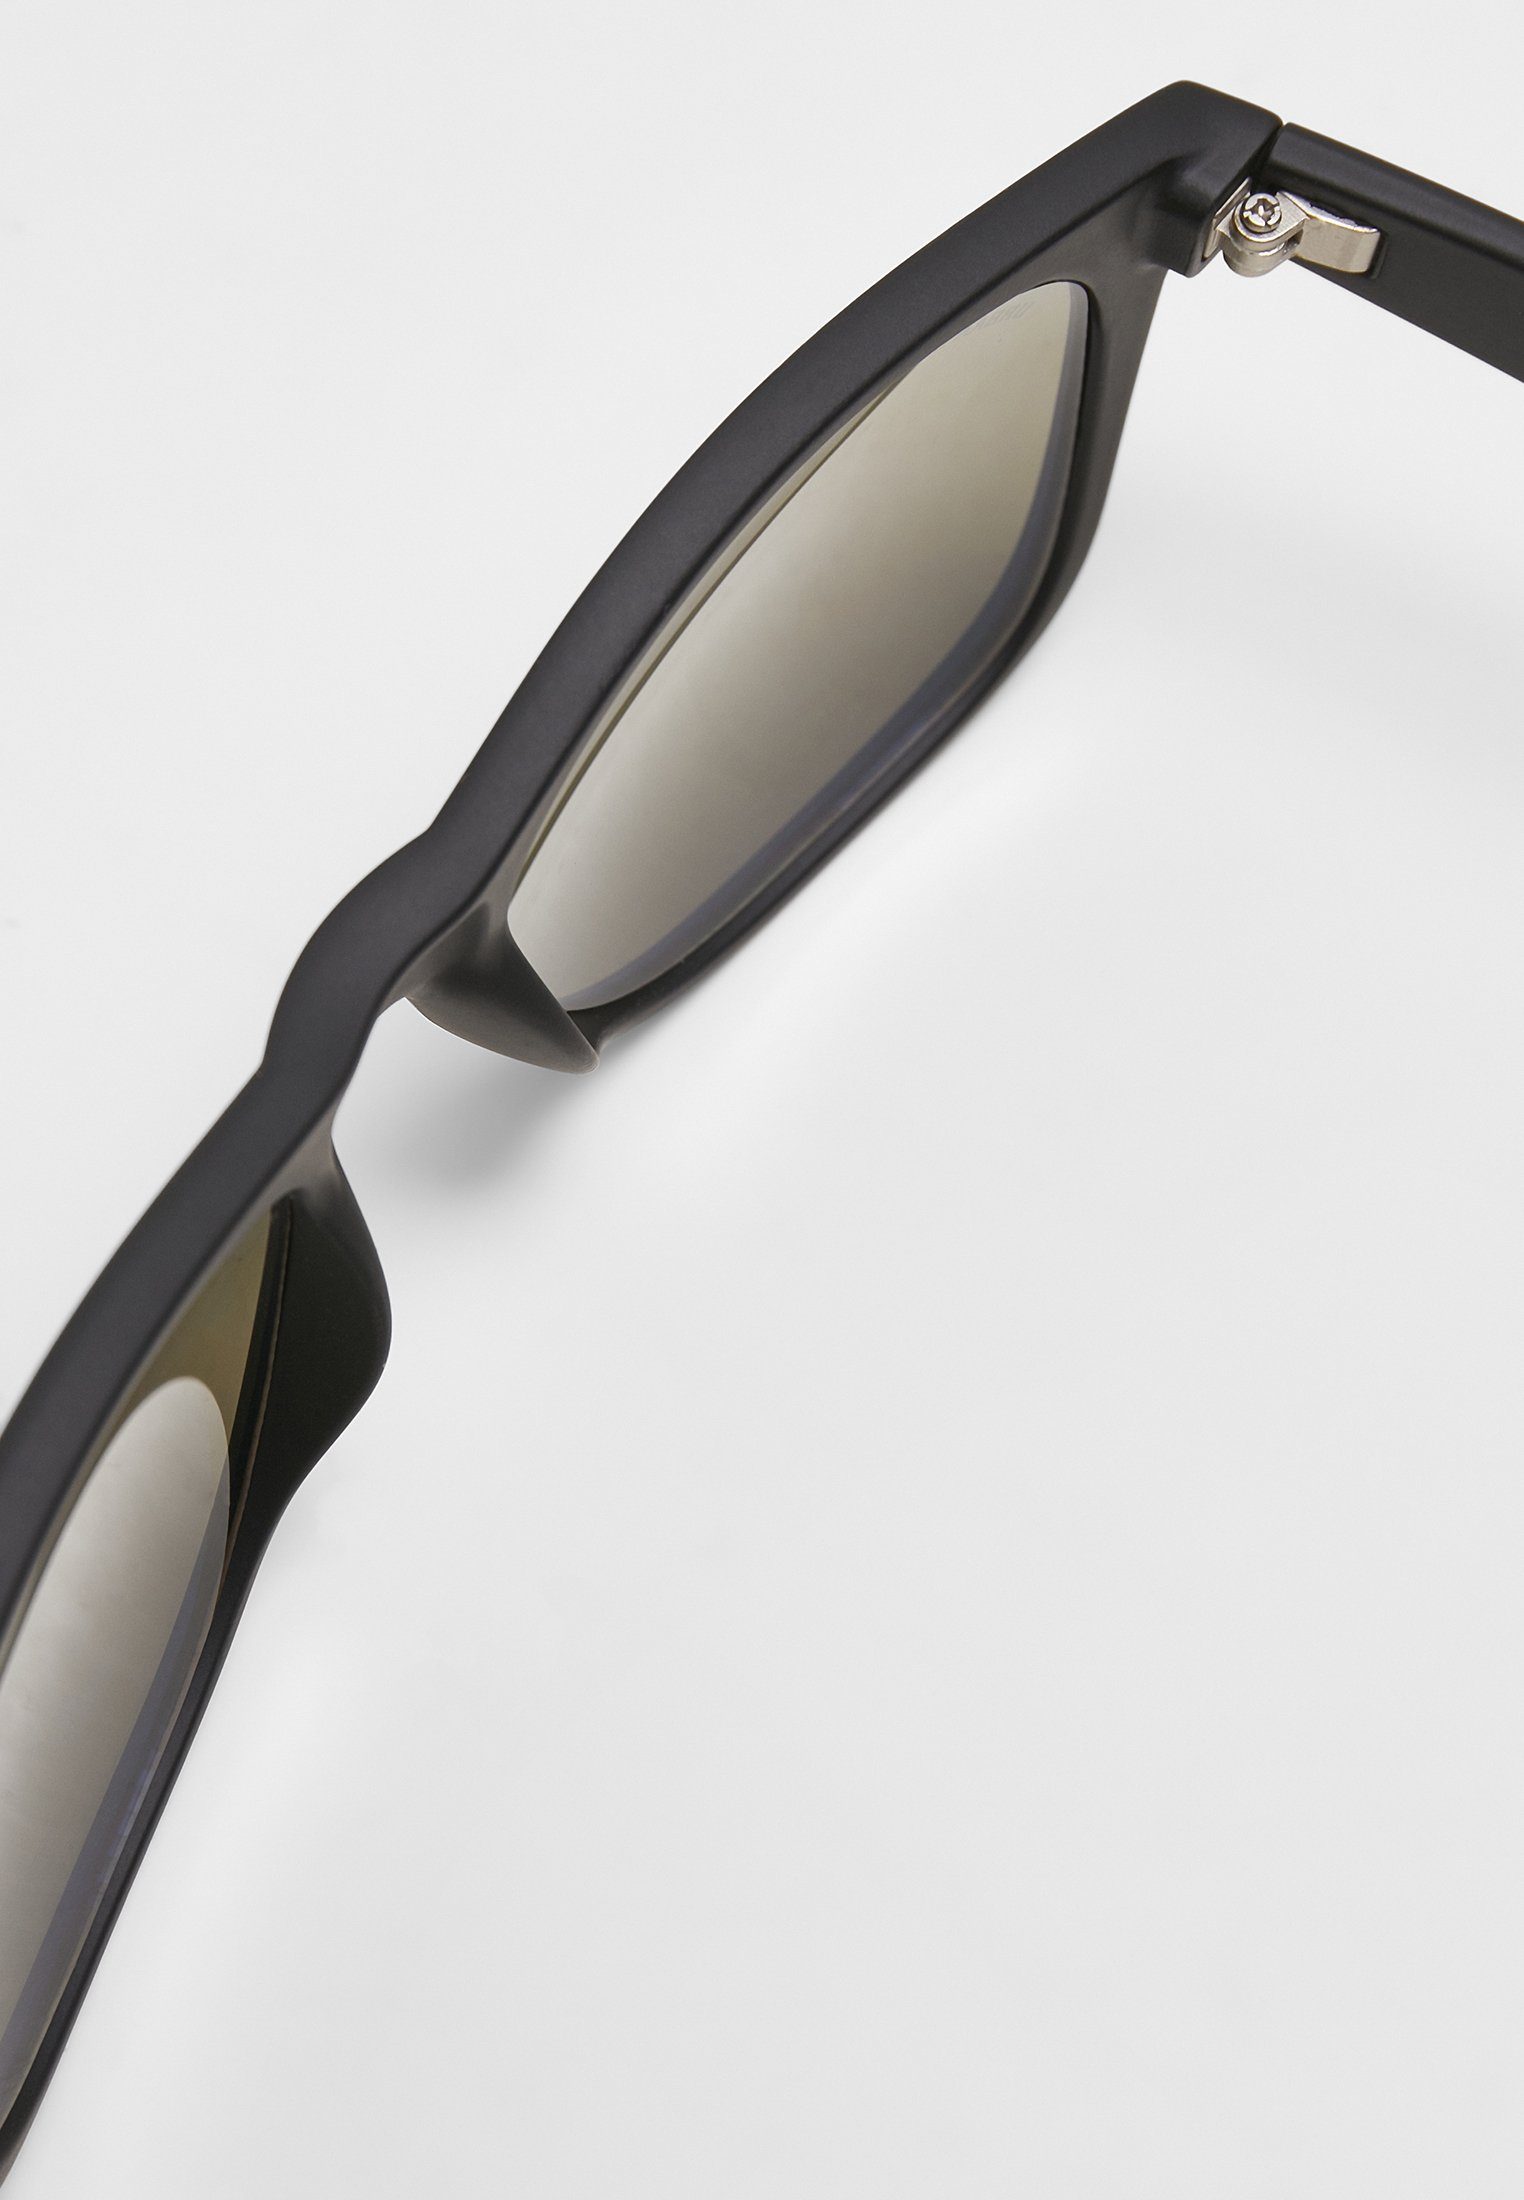 Sonnenbrille Sunglasses URBAN black/orange Likoma UC Accessoires CLASSICS Mirror